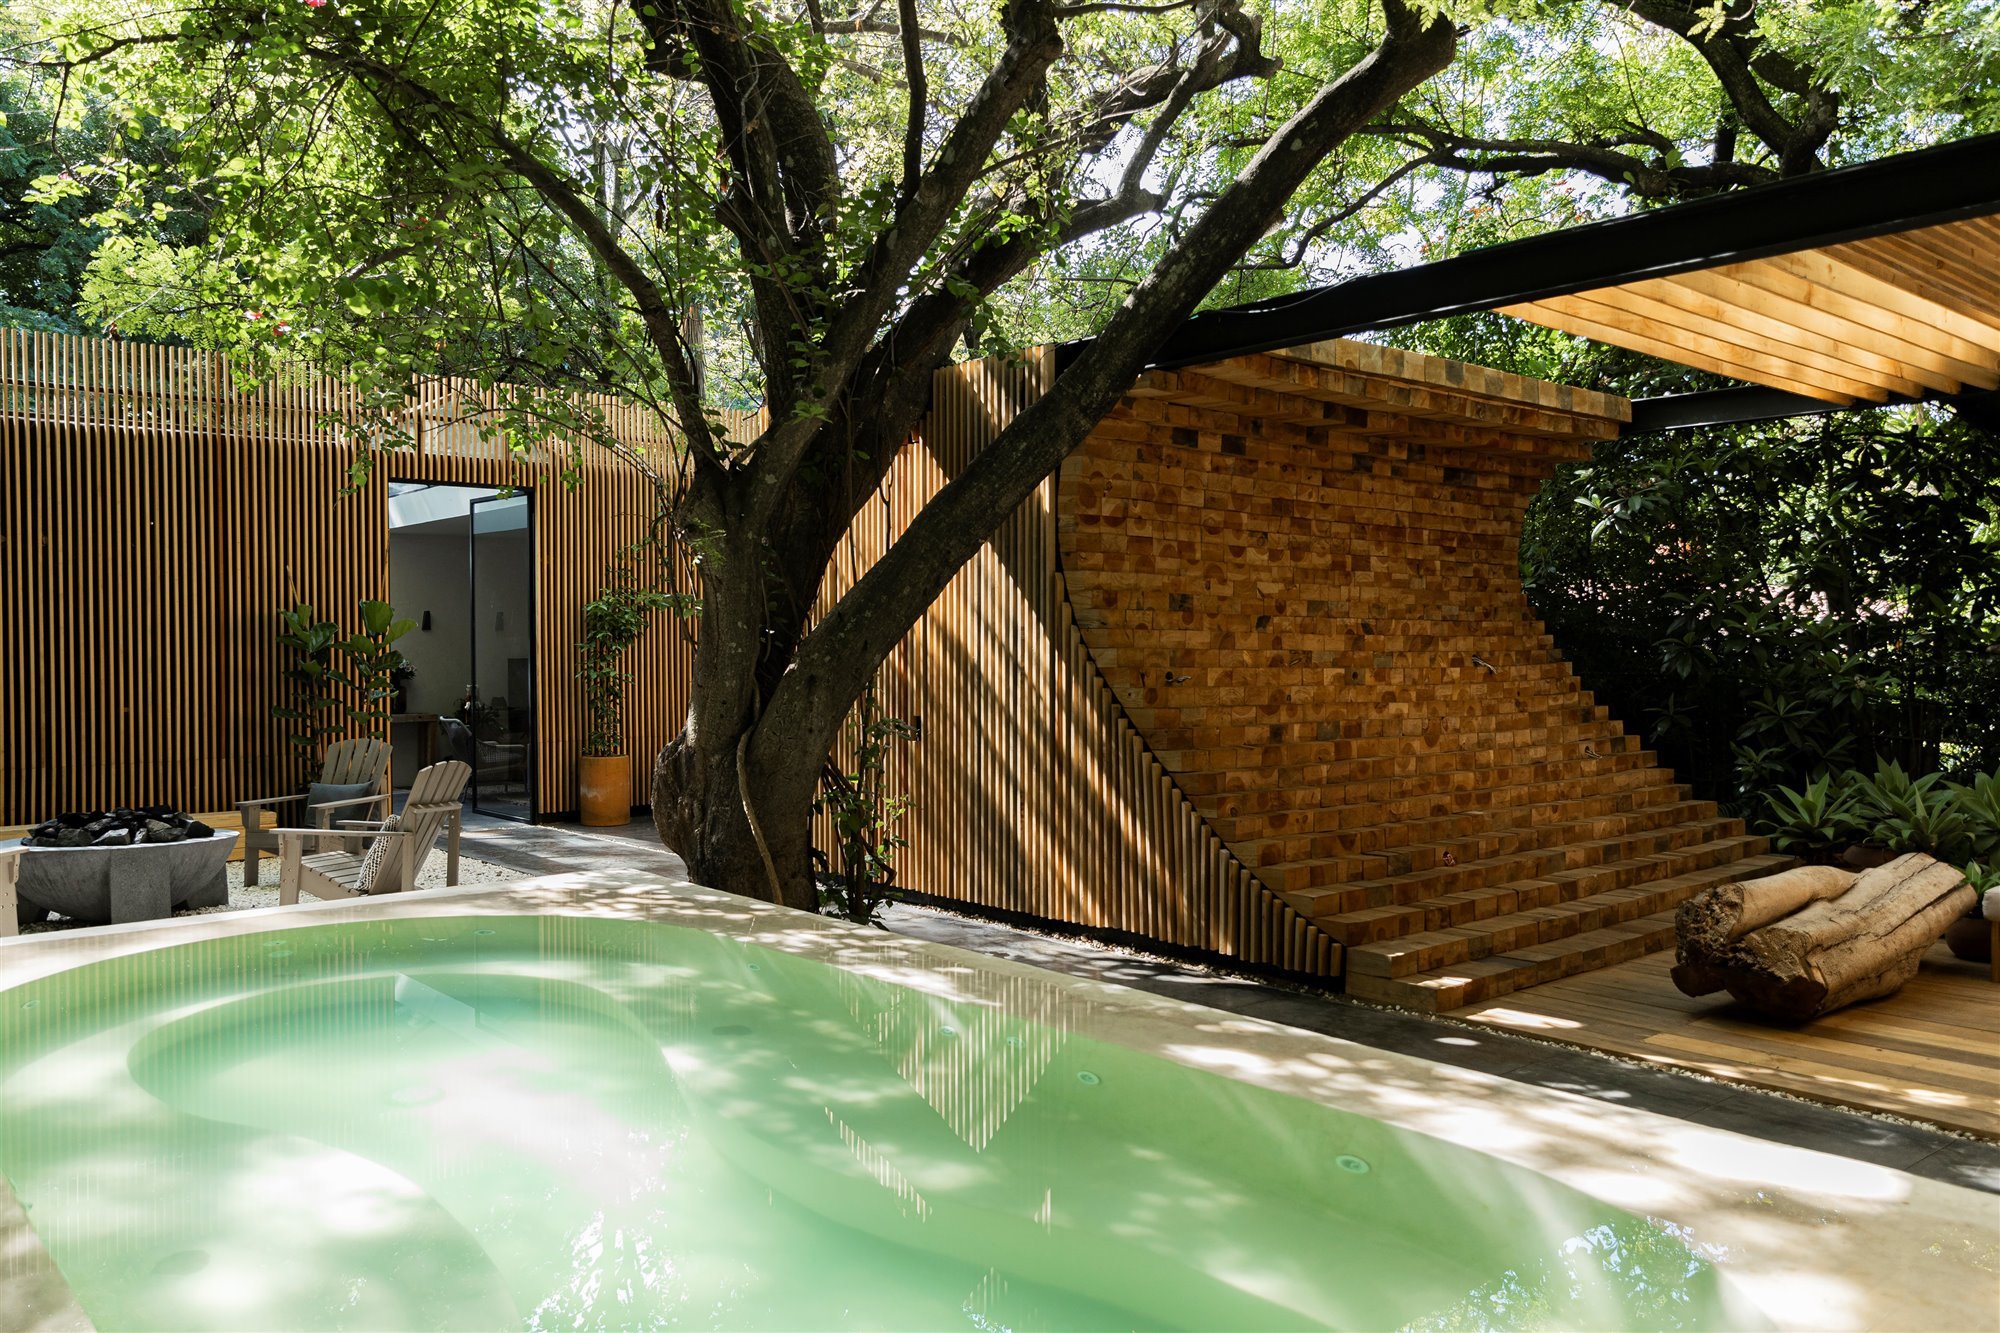 Casa moderna en Mexico rodeada de vegetacion en la selva piscina